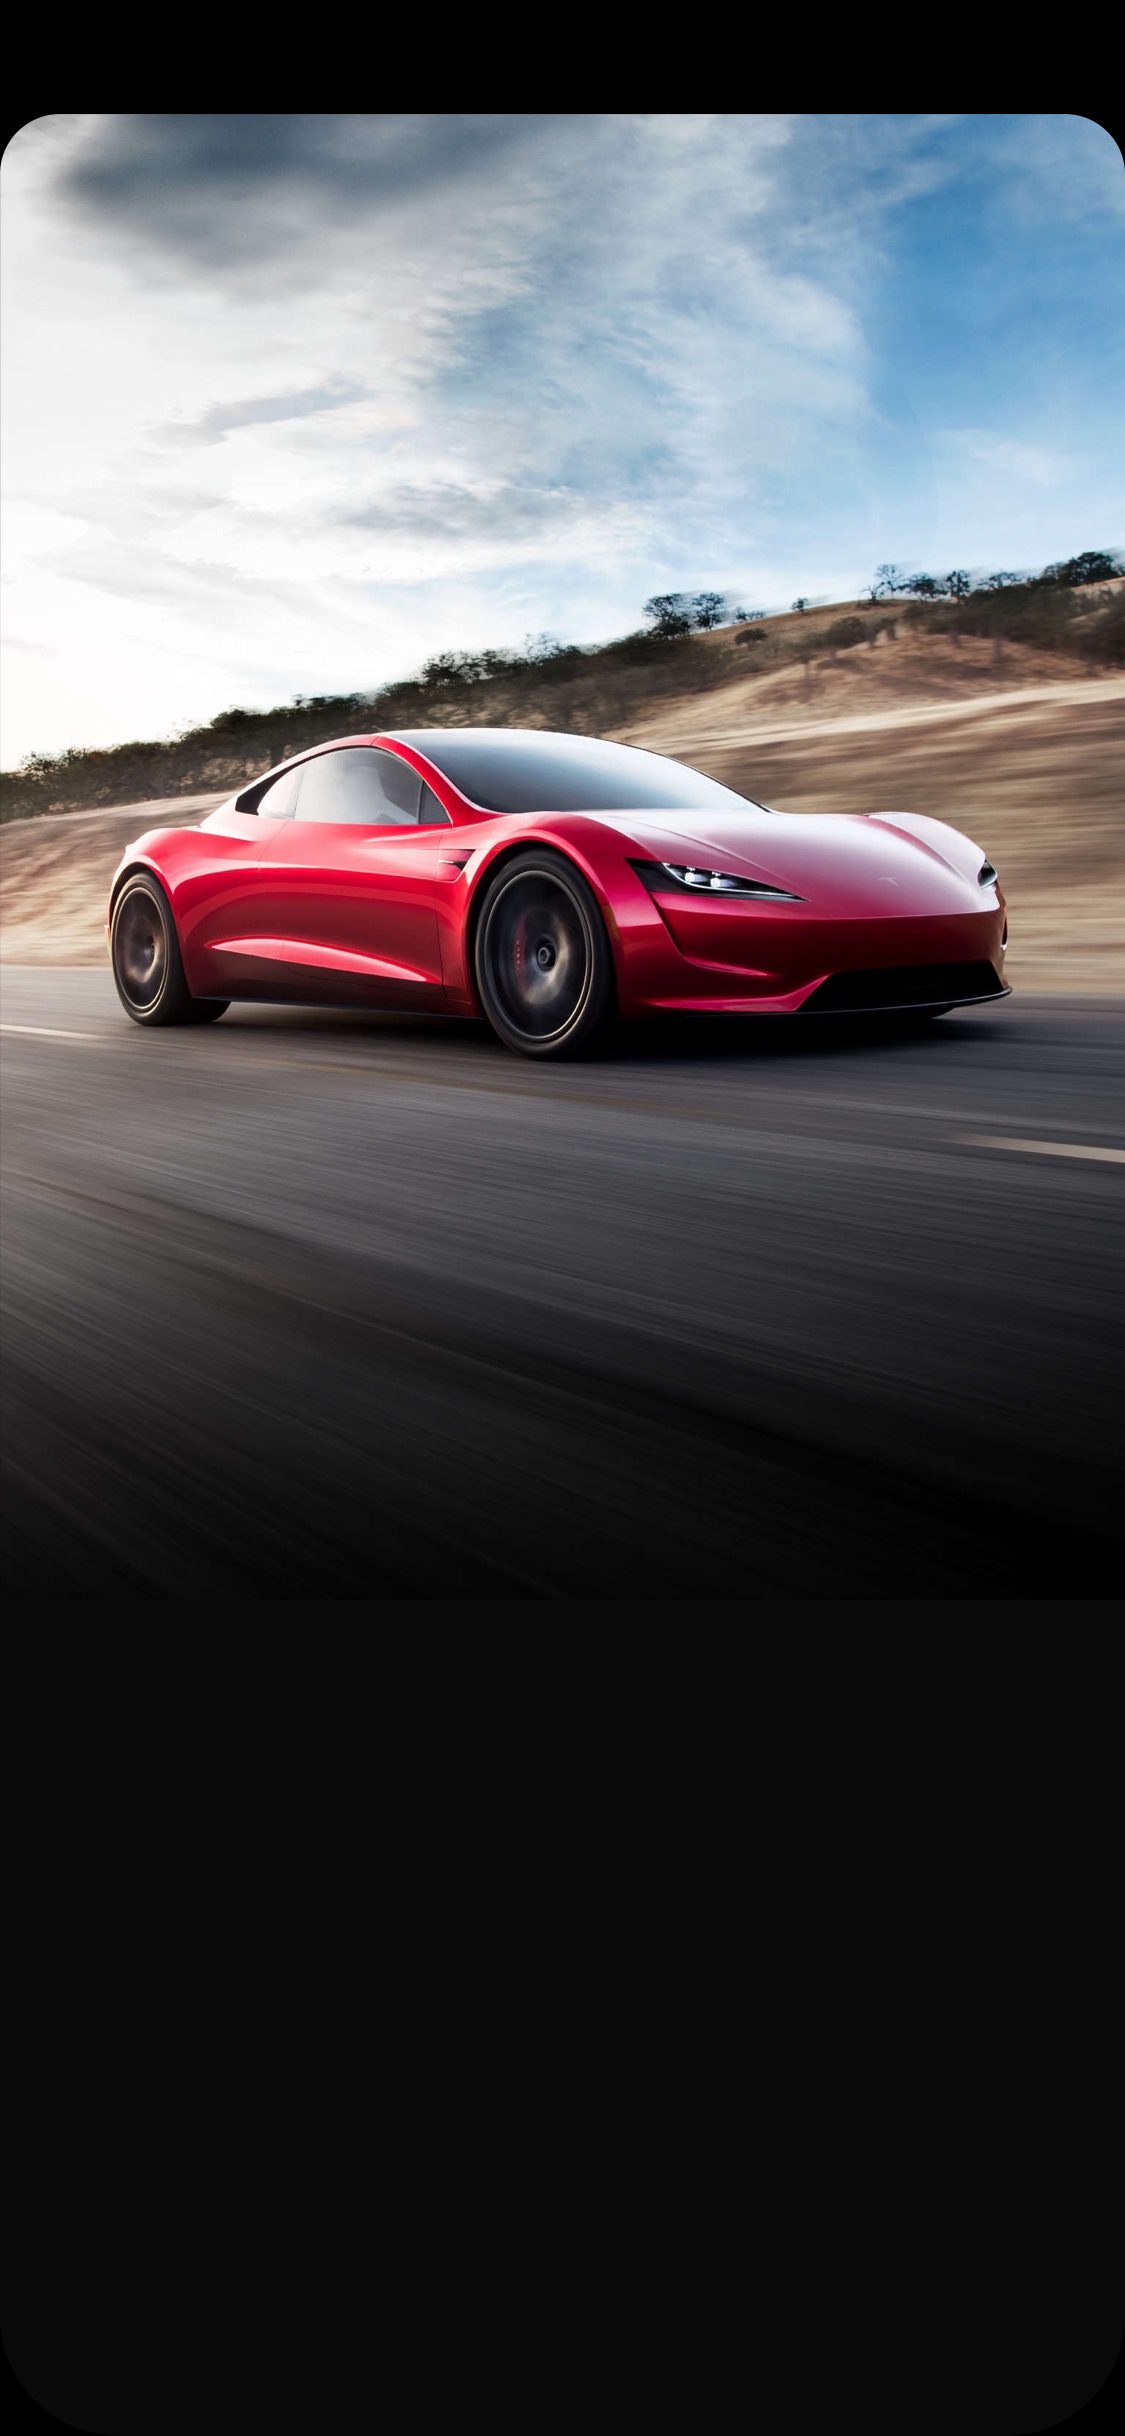 Tesla Roadster Wallpapers For iPhone X iPad And Mac iOS Hacker